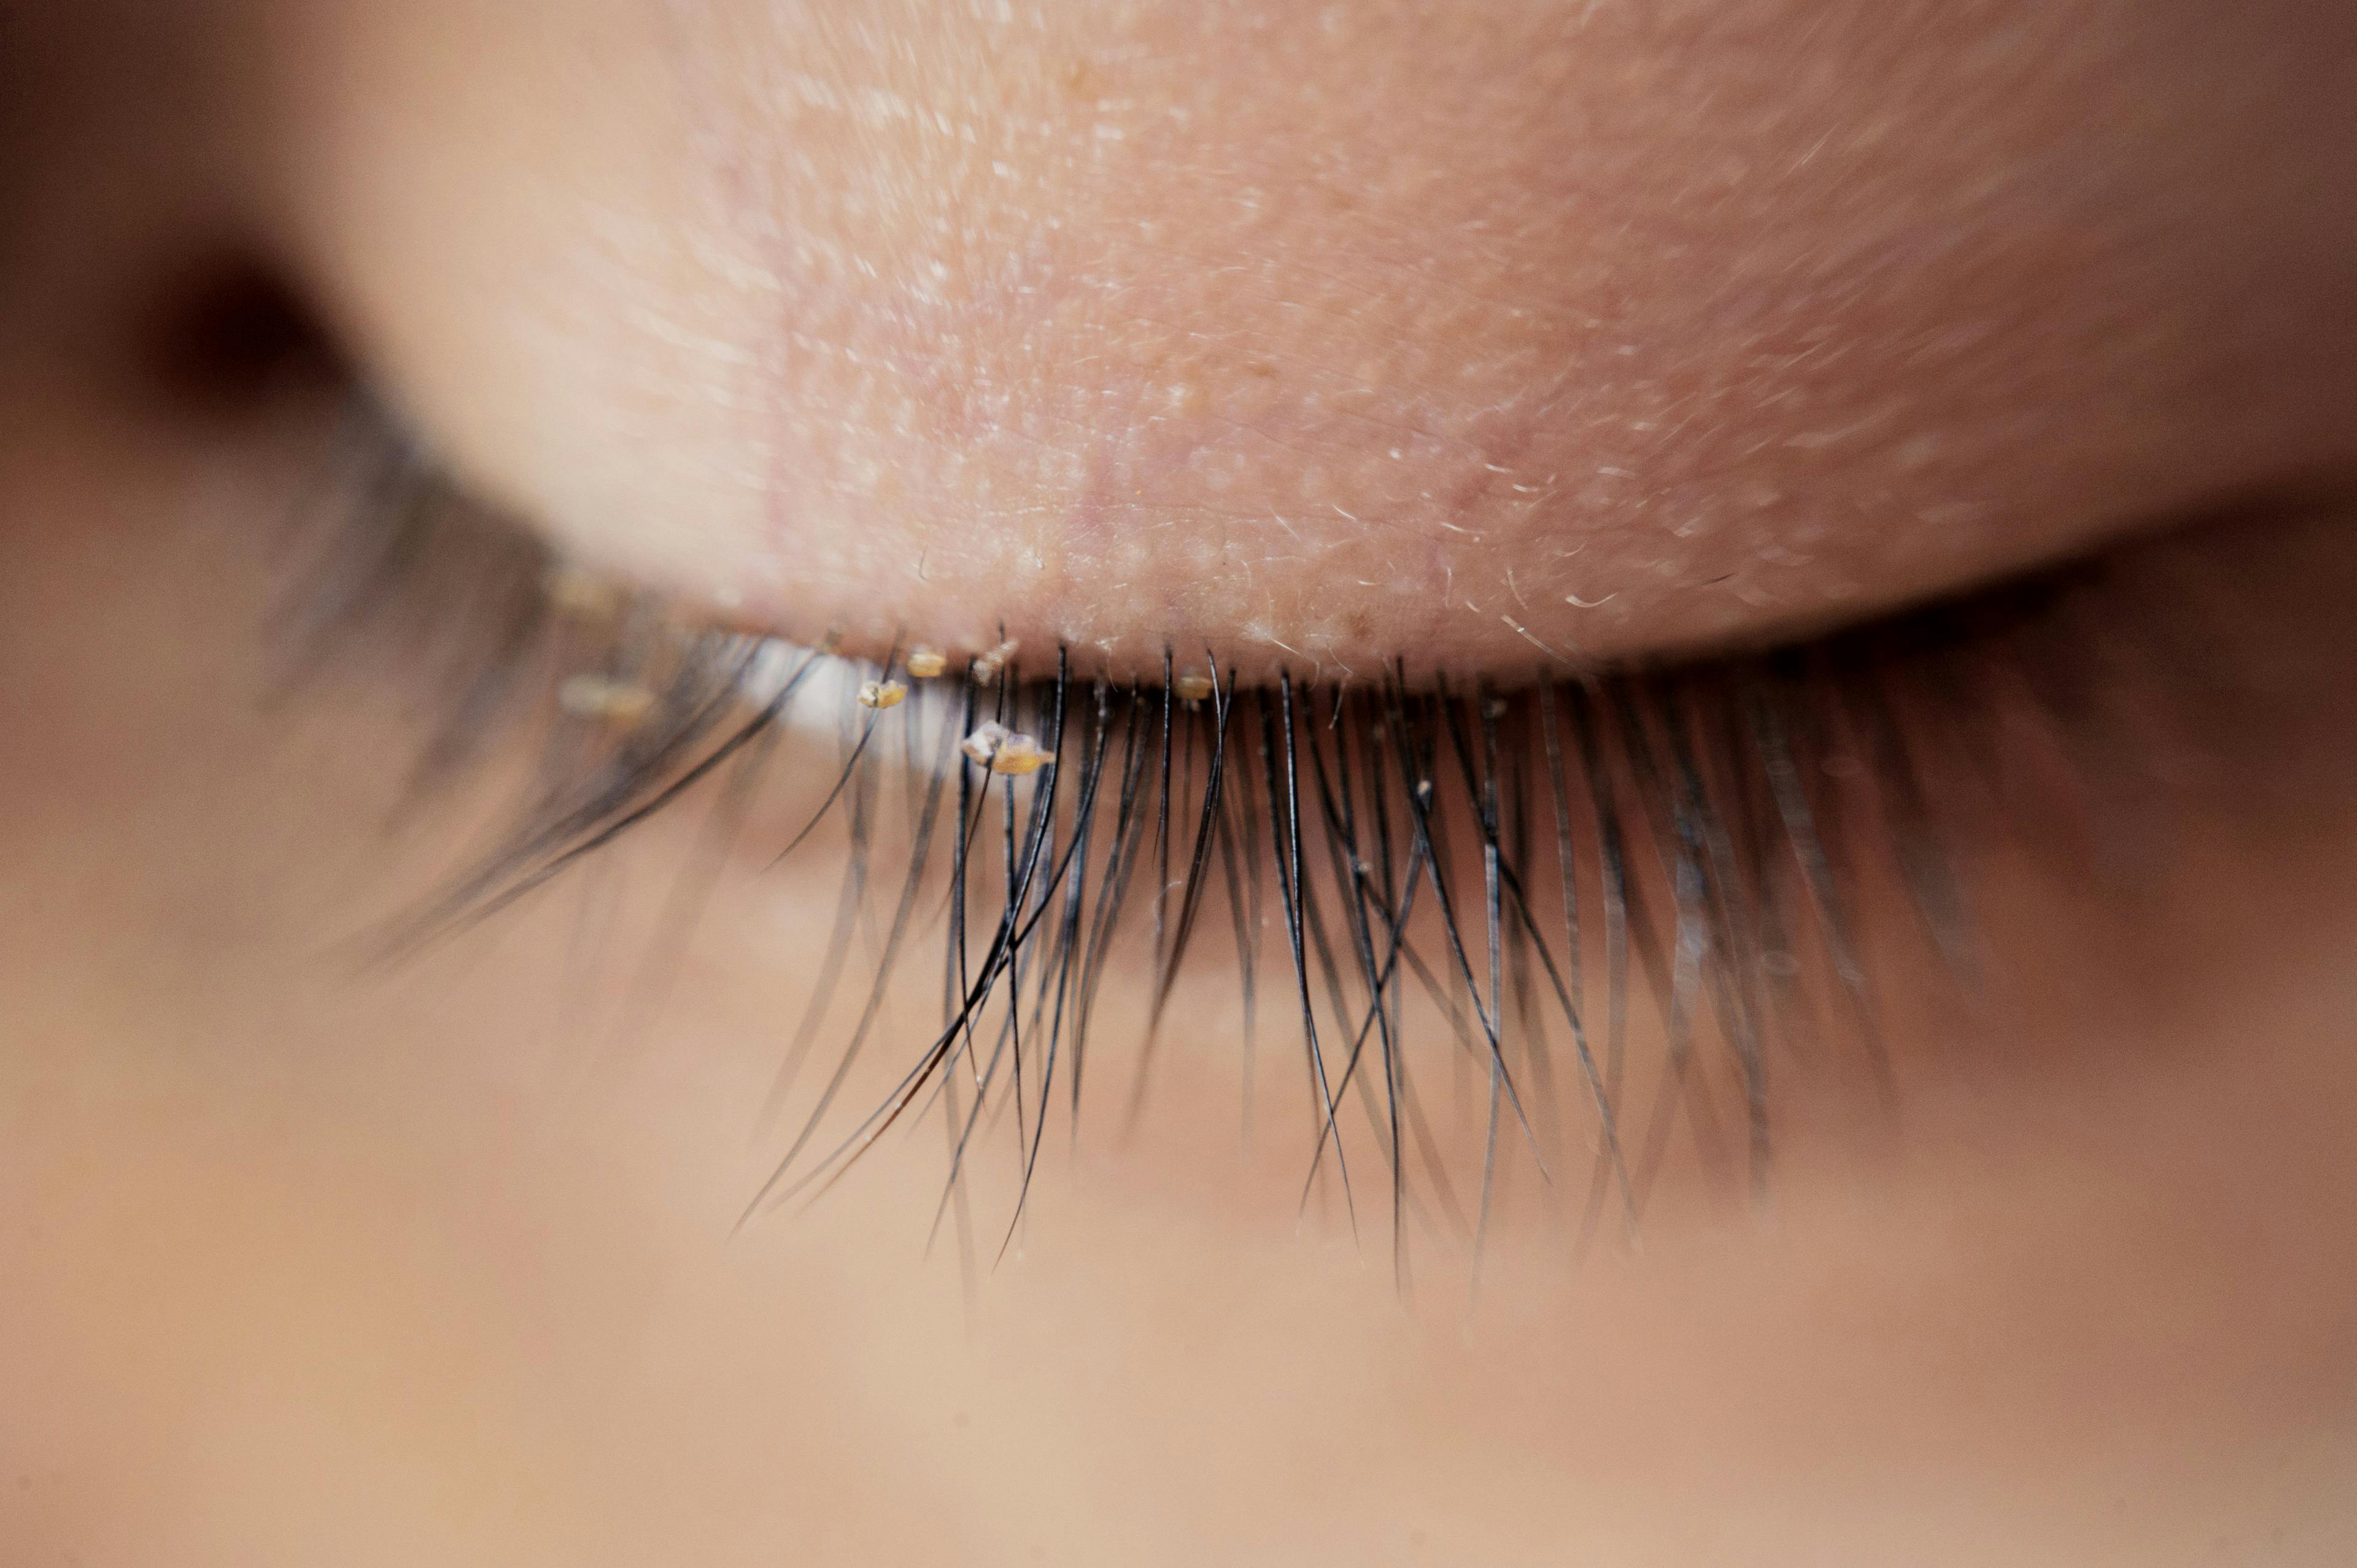 Close up severe conjunctivitis from eyelash mites | Image credit: ohishiftl - stock.adobe.com